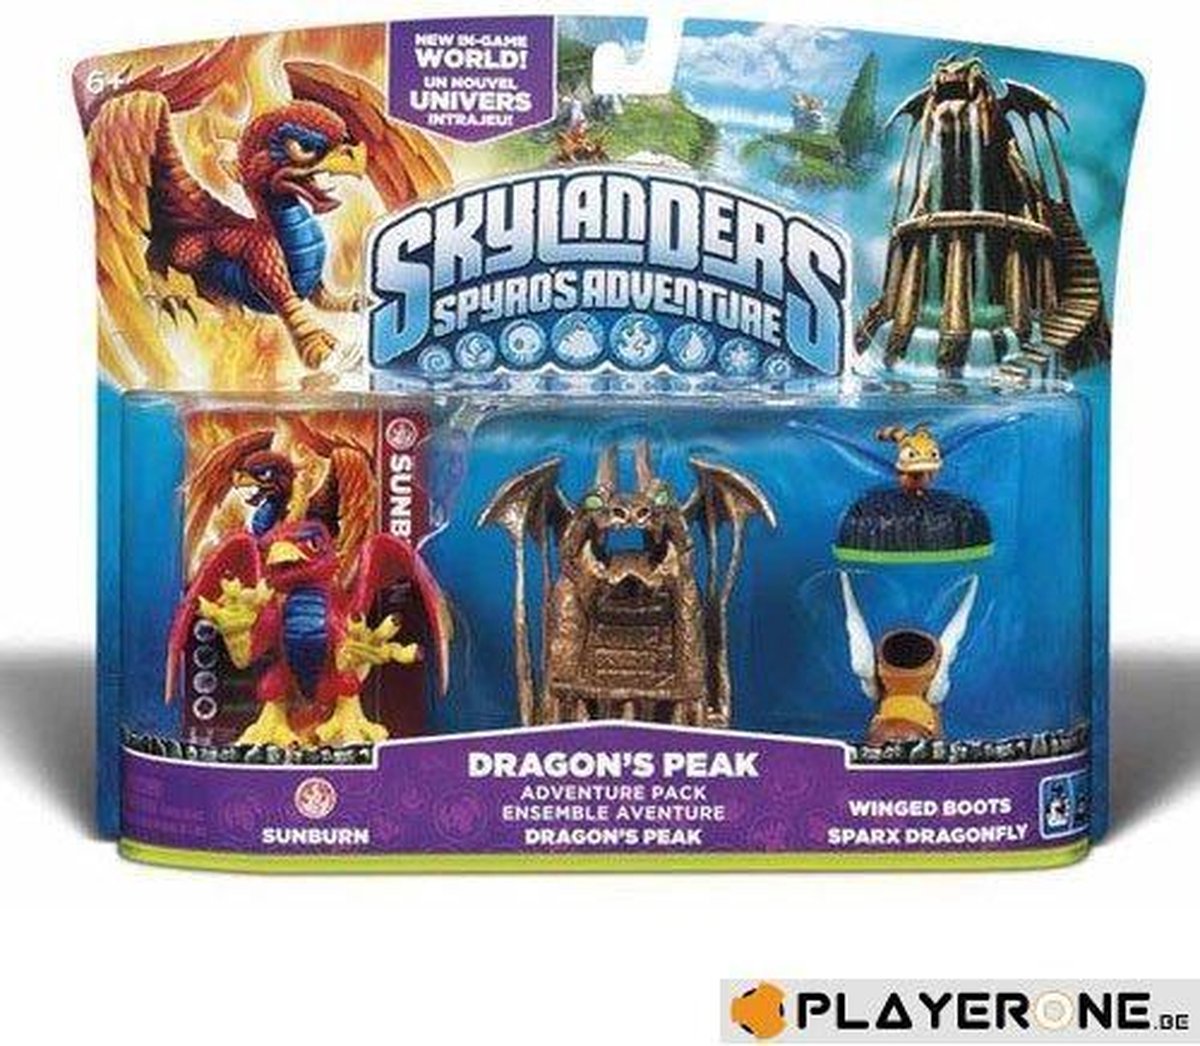 Skylanders Spyro's Adventure Dragon's Peak Adventure Pack Wii + PS3 + Xbox 360 + 3DS + PC